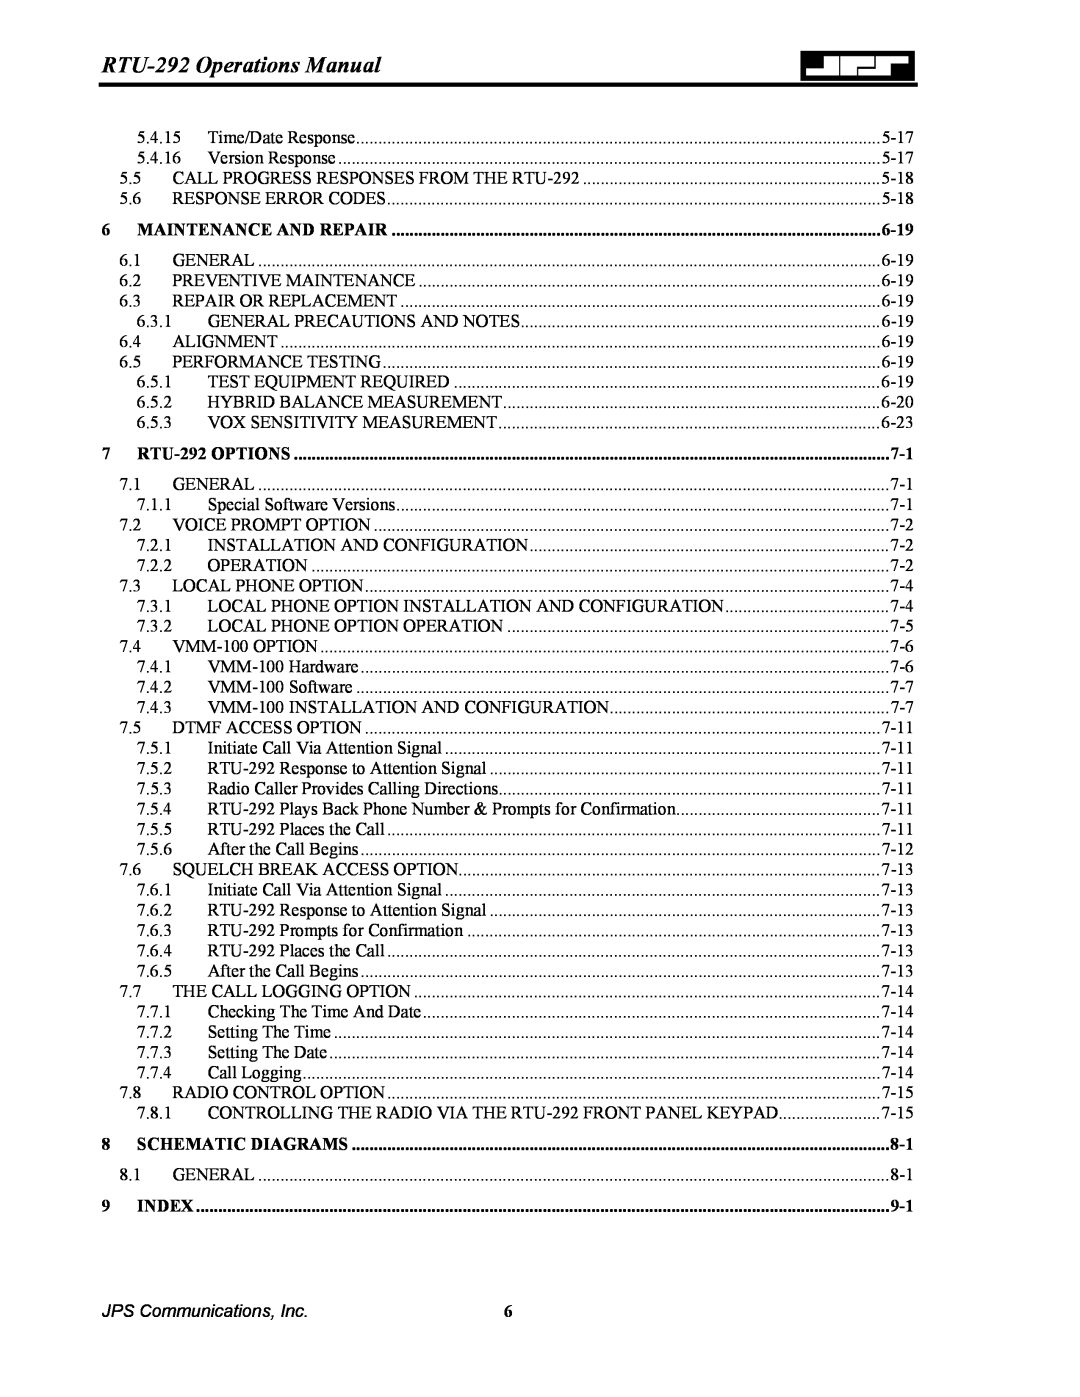 Nortel Networks RTU-292 Operations Manual, Maintenance And Repair, 6-19, RTU-292 OPTIONS, Schematic Diagrams, Index 